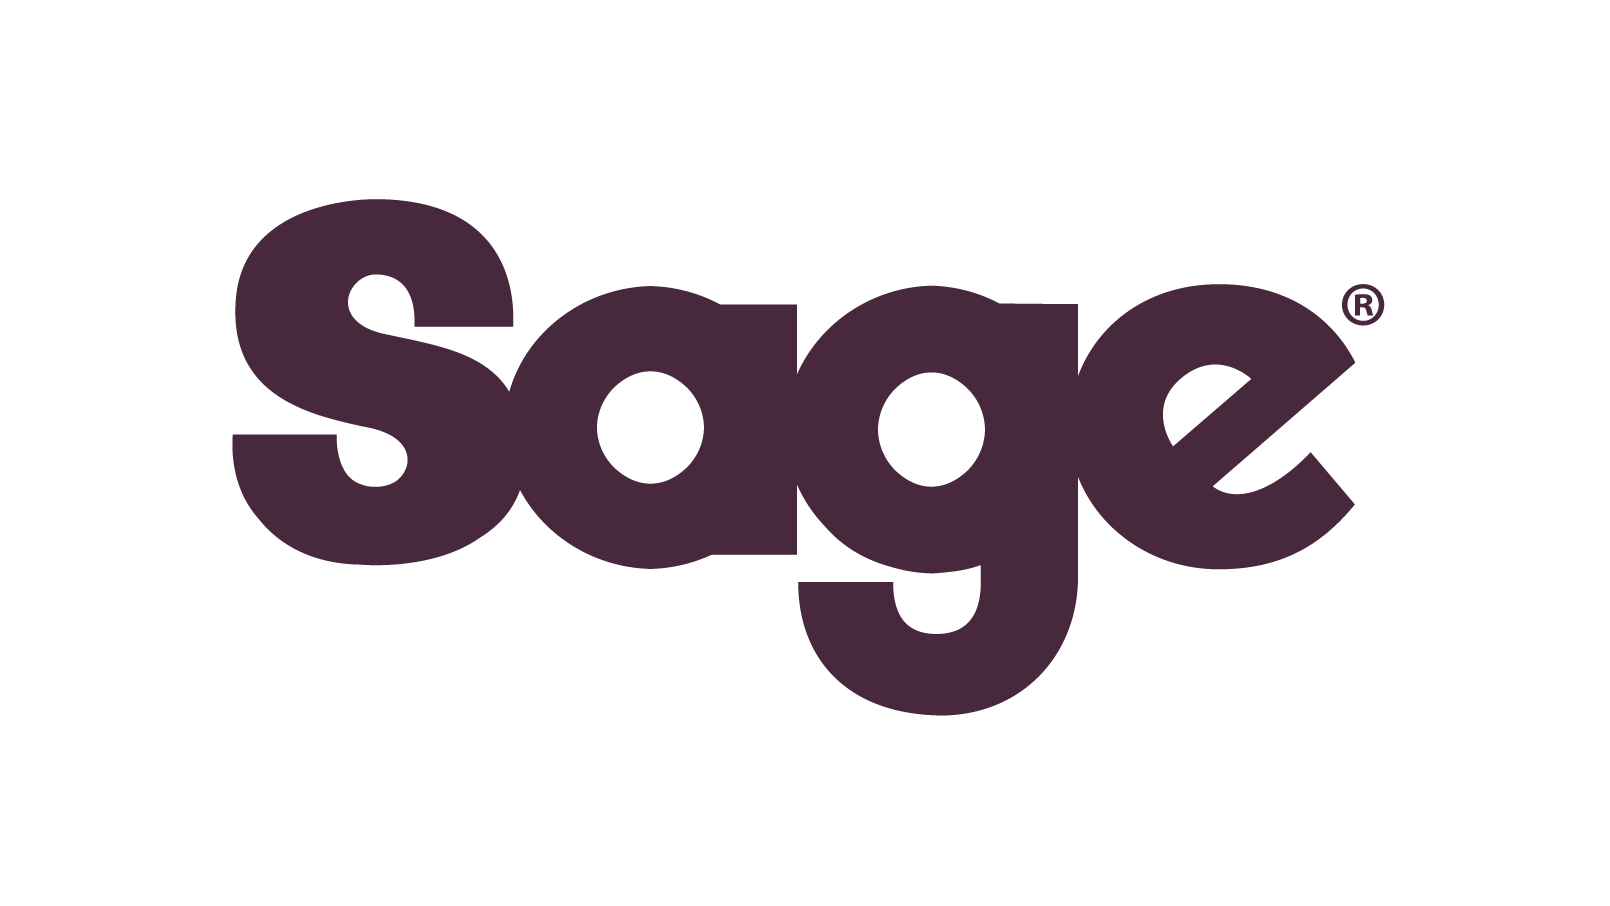 Sage Coupons & Promo Codes